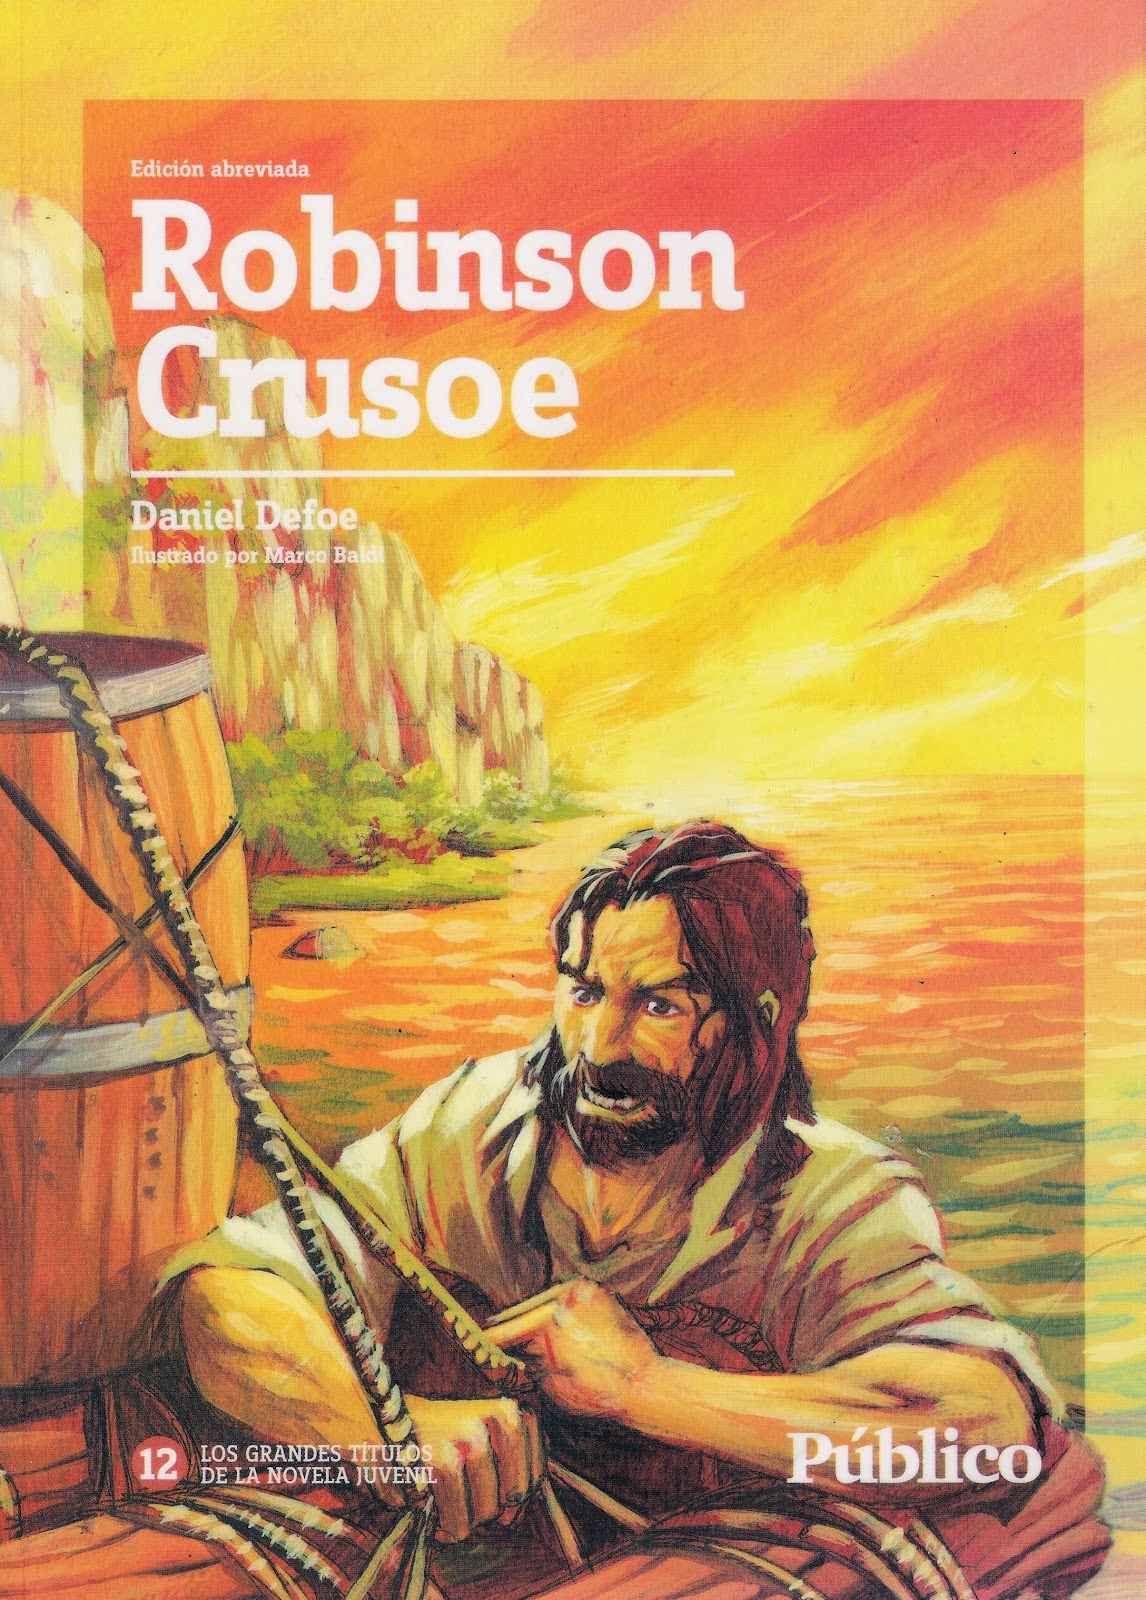 Слушать робинзон крузо аудиокнига полностью. Daniel Defoe Робинзон. Defoe Daniel "Robinson Crusoe". Книга Robinson Crusoe. Life and Adventures of Robinson Crusoe.